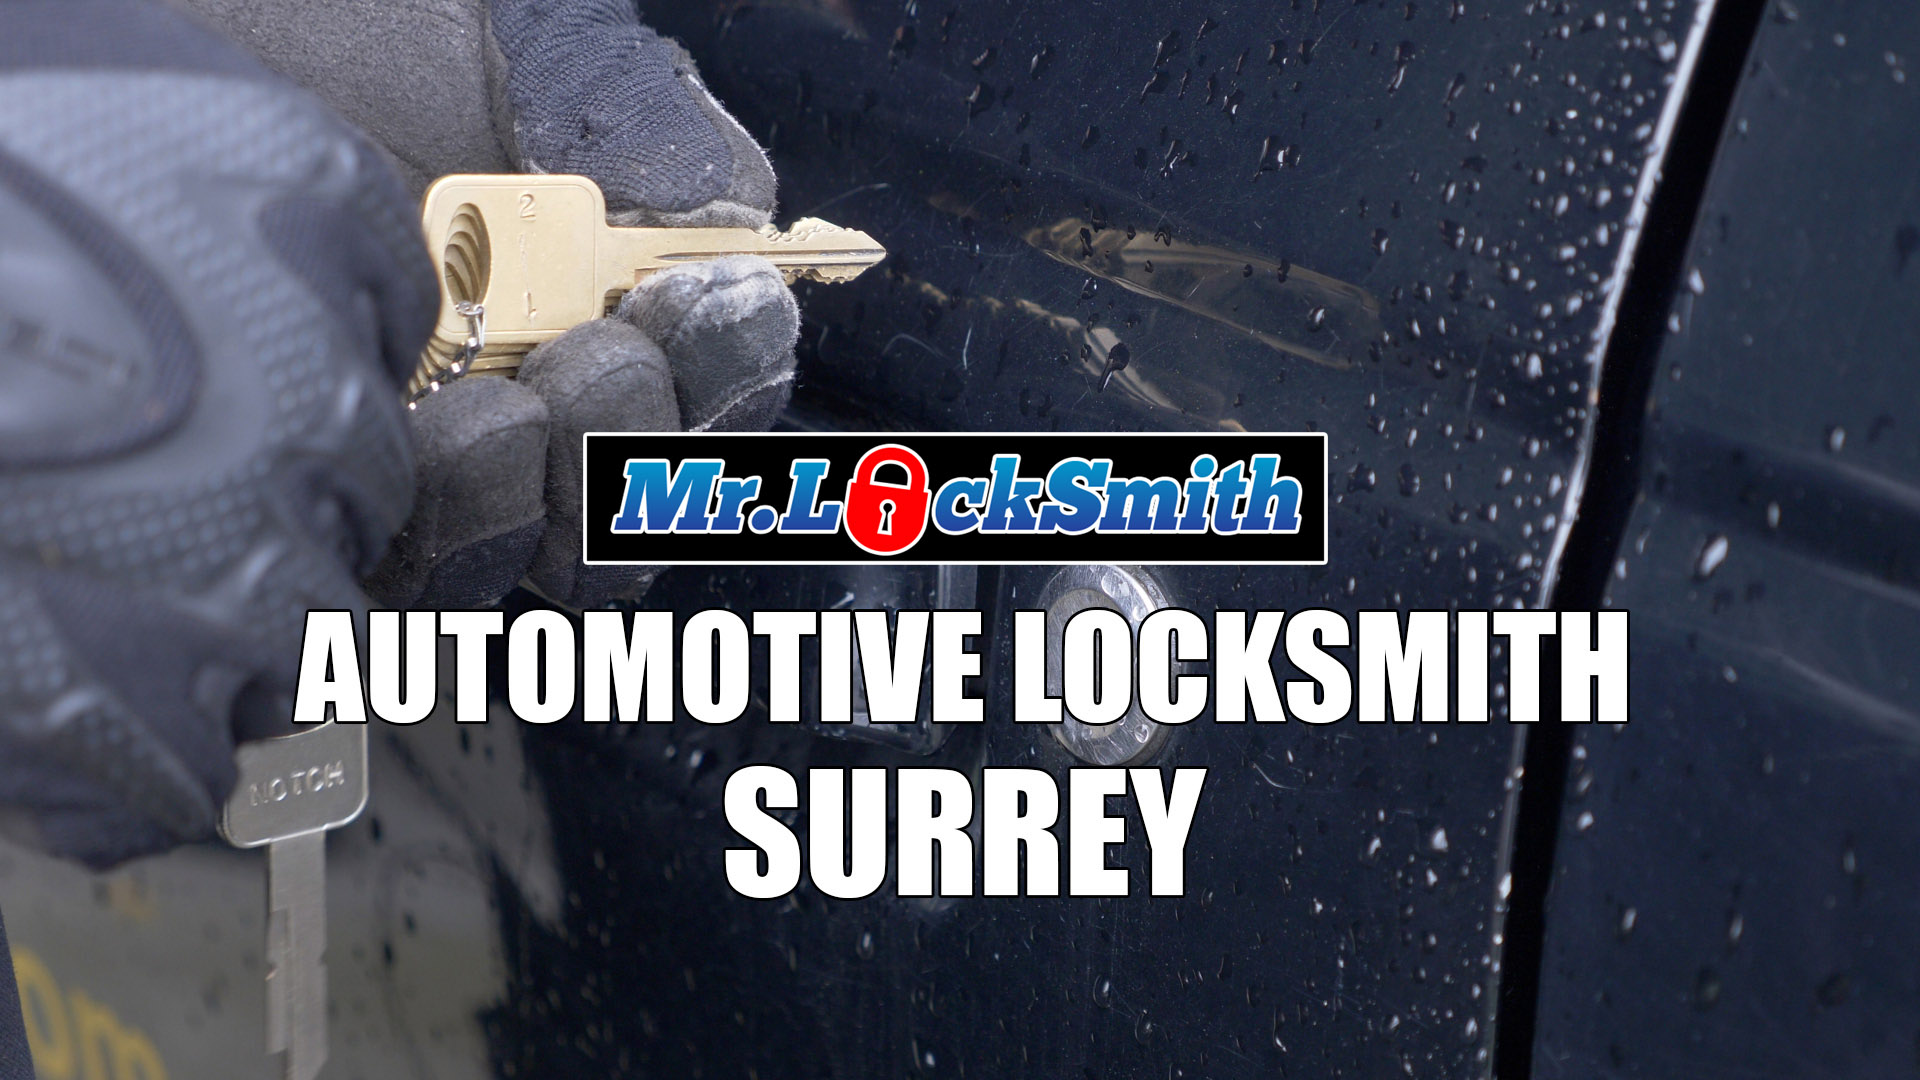 Automotive Locksmith Surrey BC